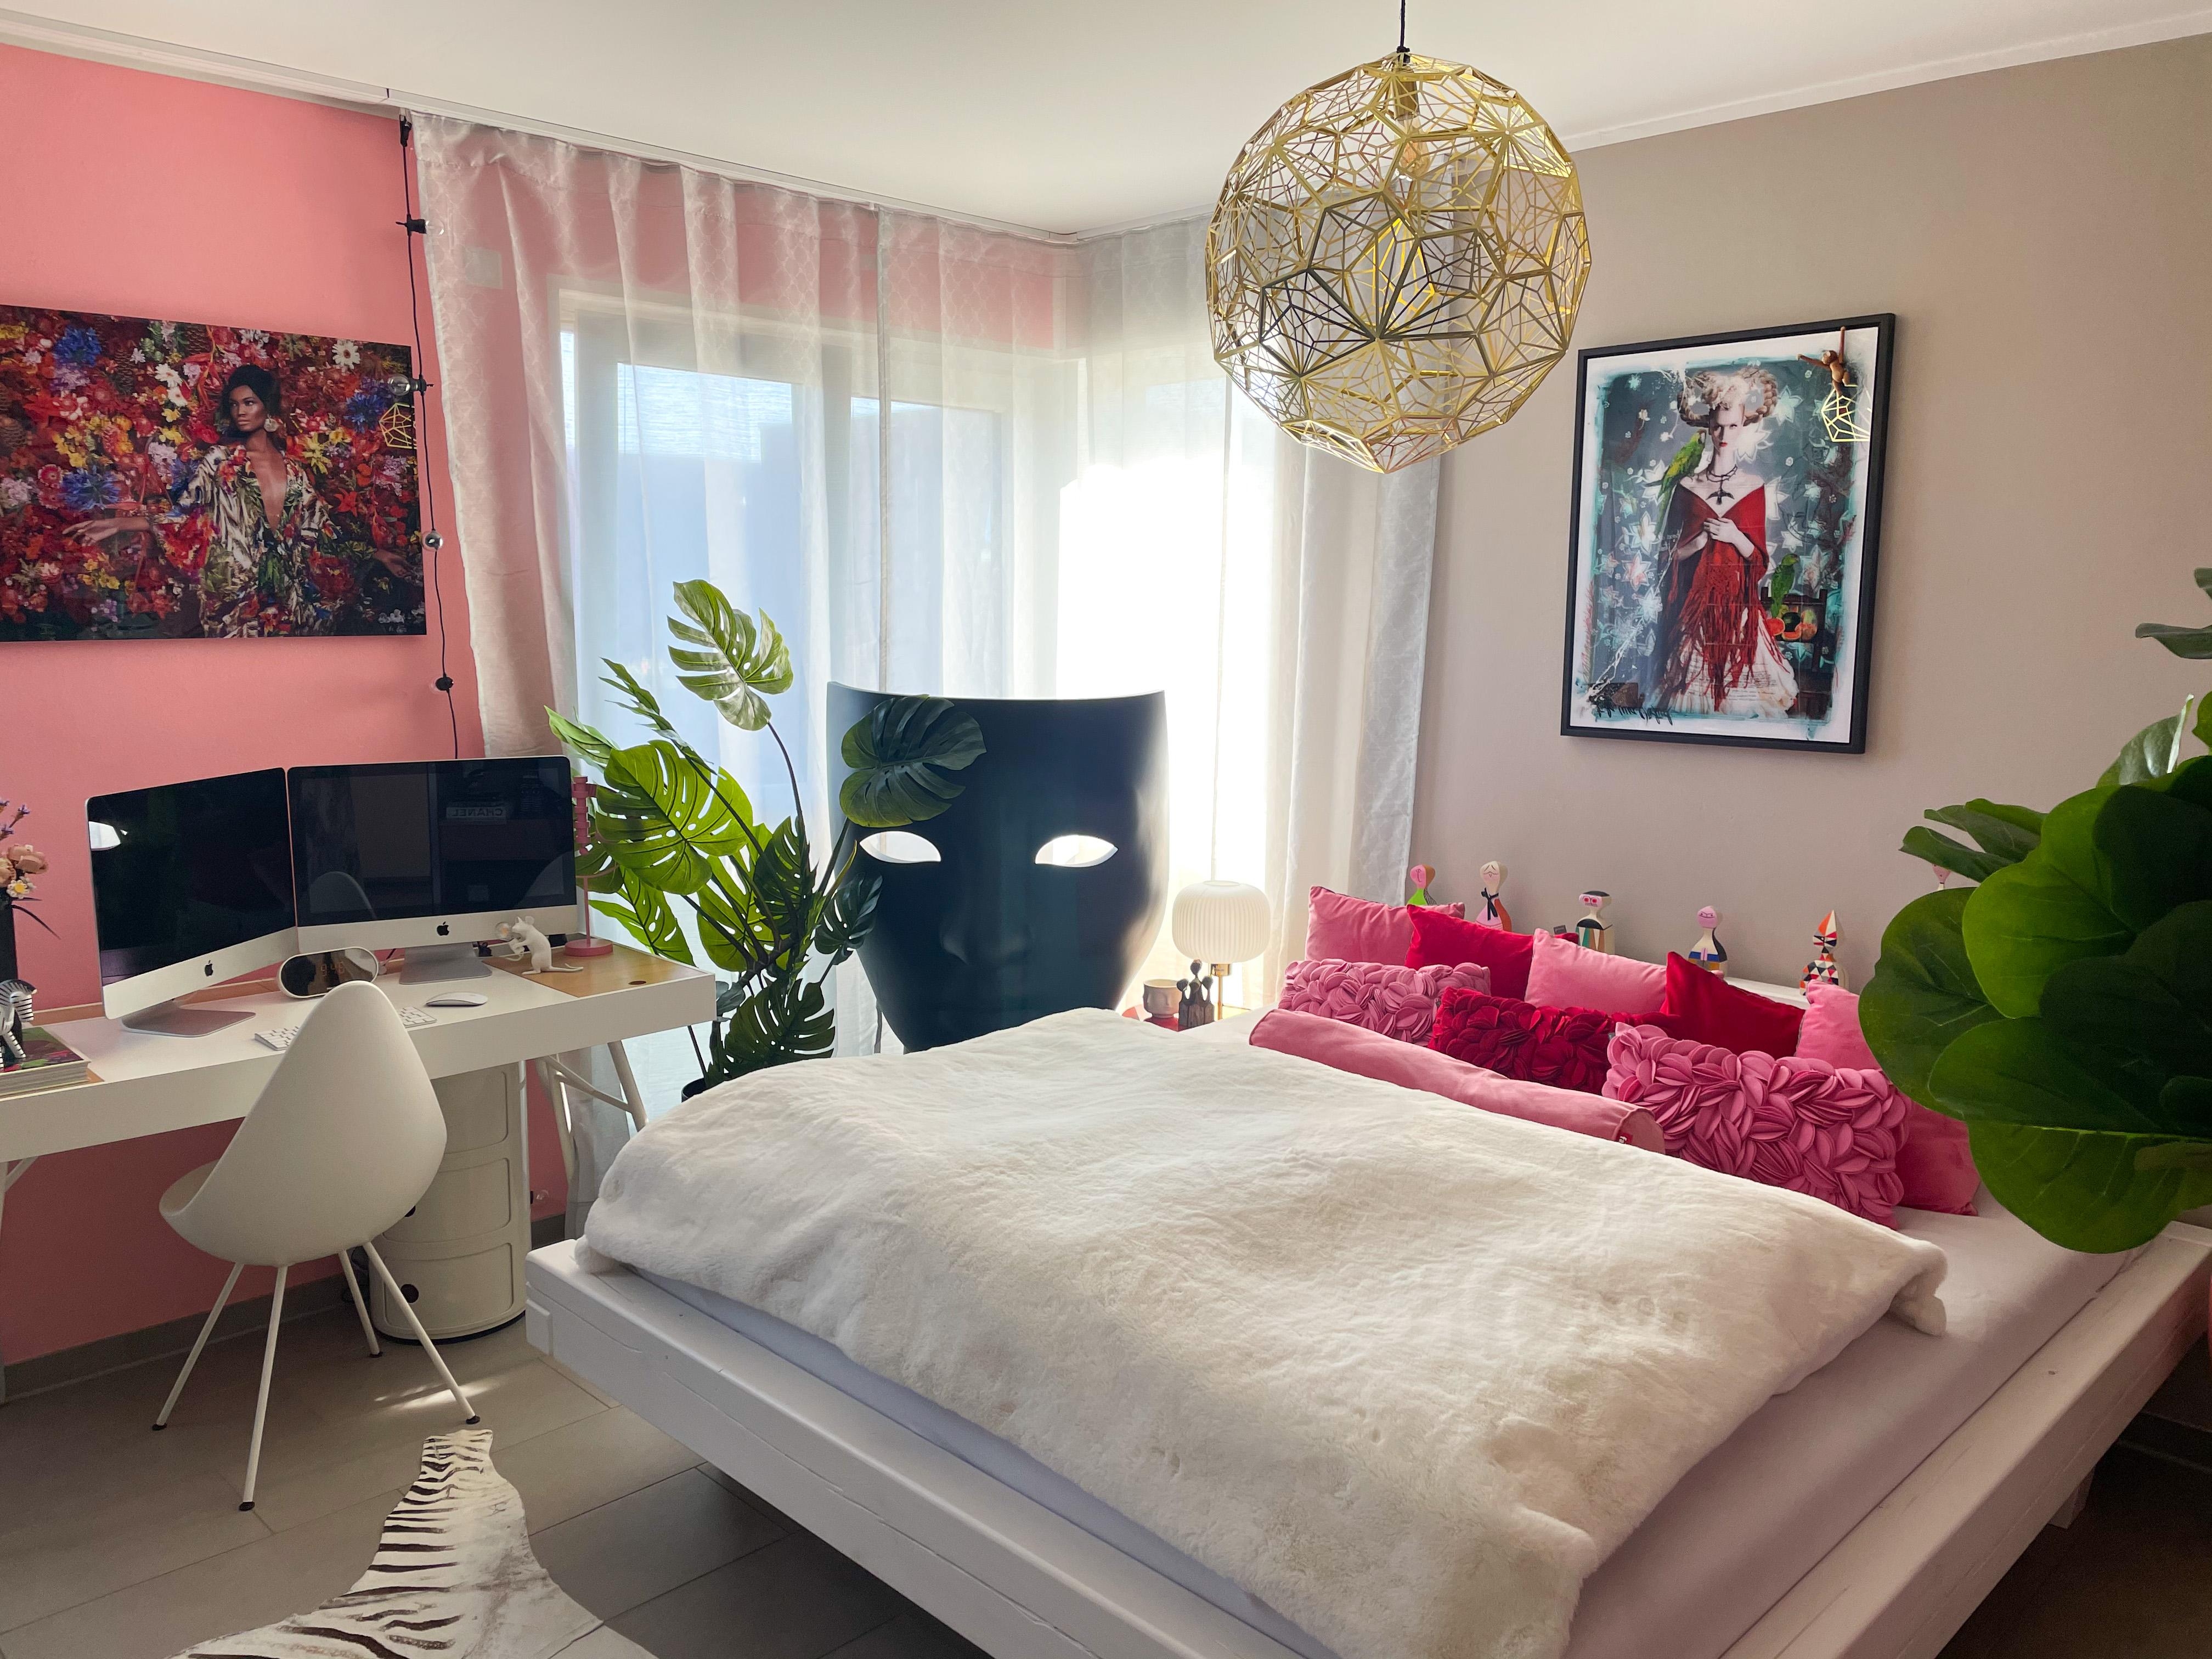 #bedroom #livecolorfully #eclecticdecor #farbenfroh #designlover